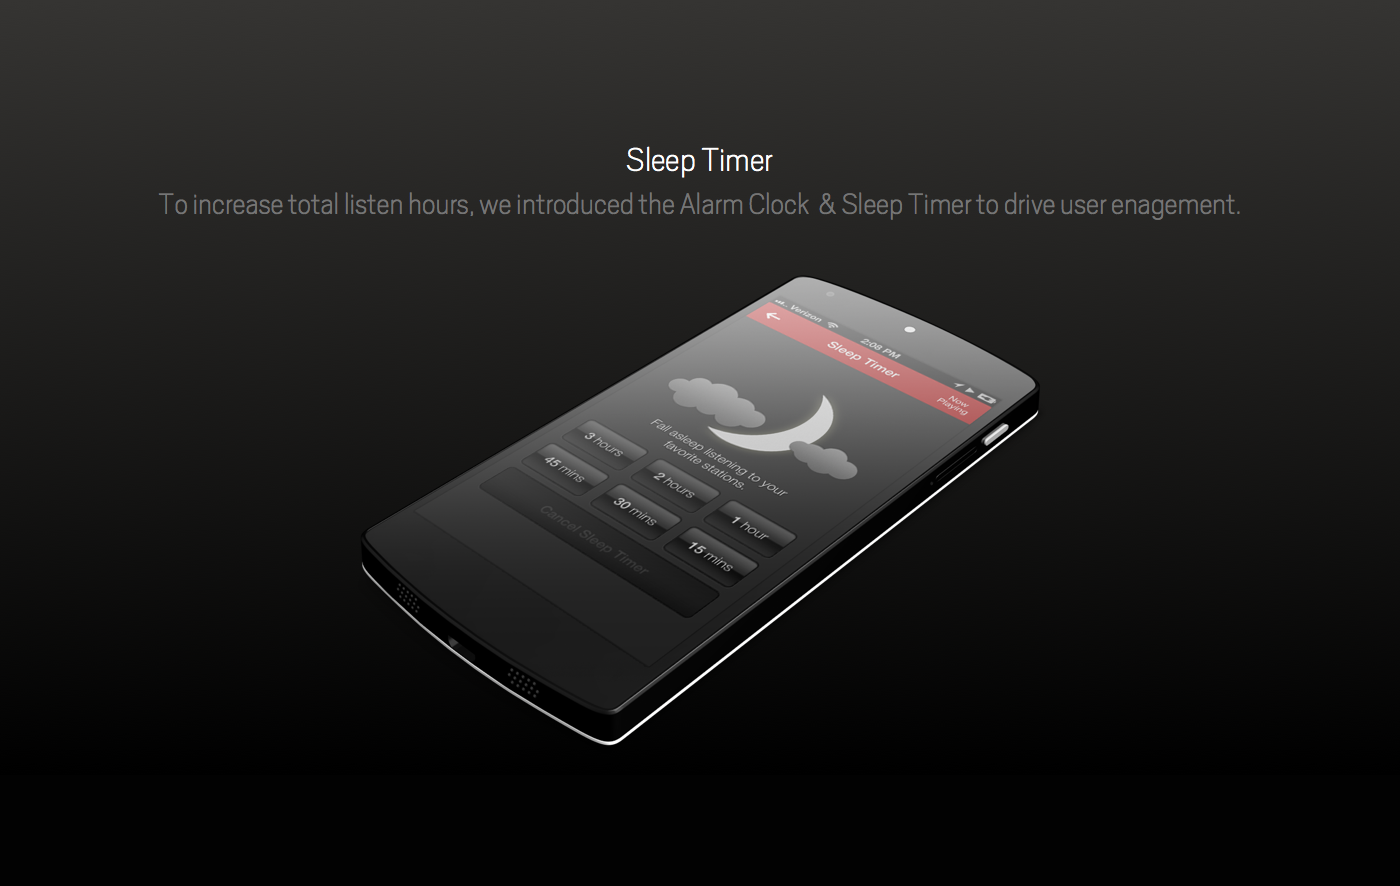 iheartradio Alarm clock sleep timer android spotify rdio pandora